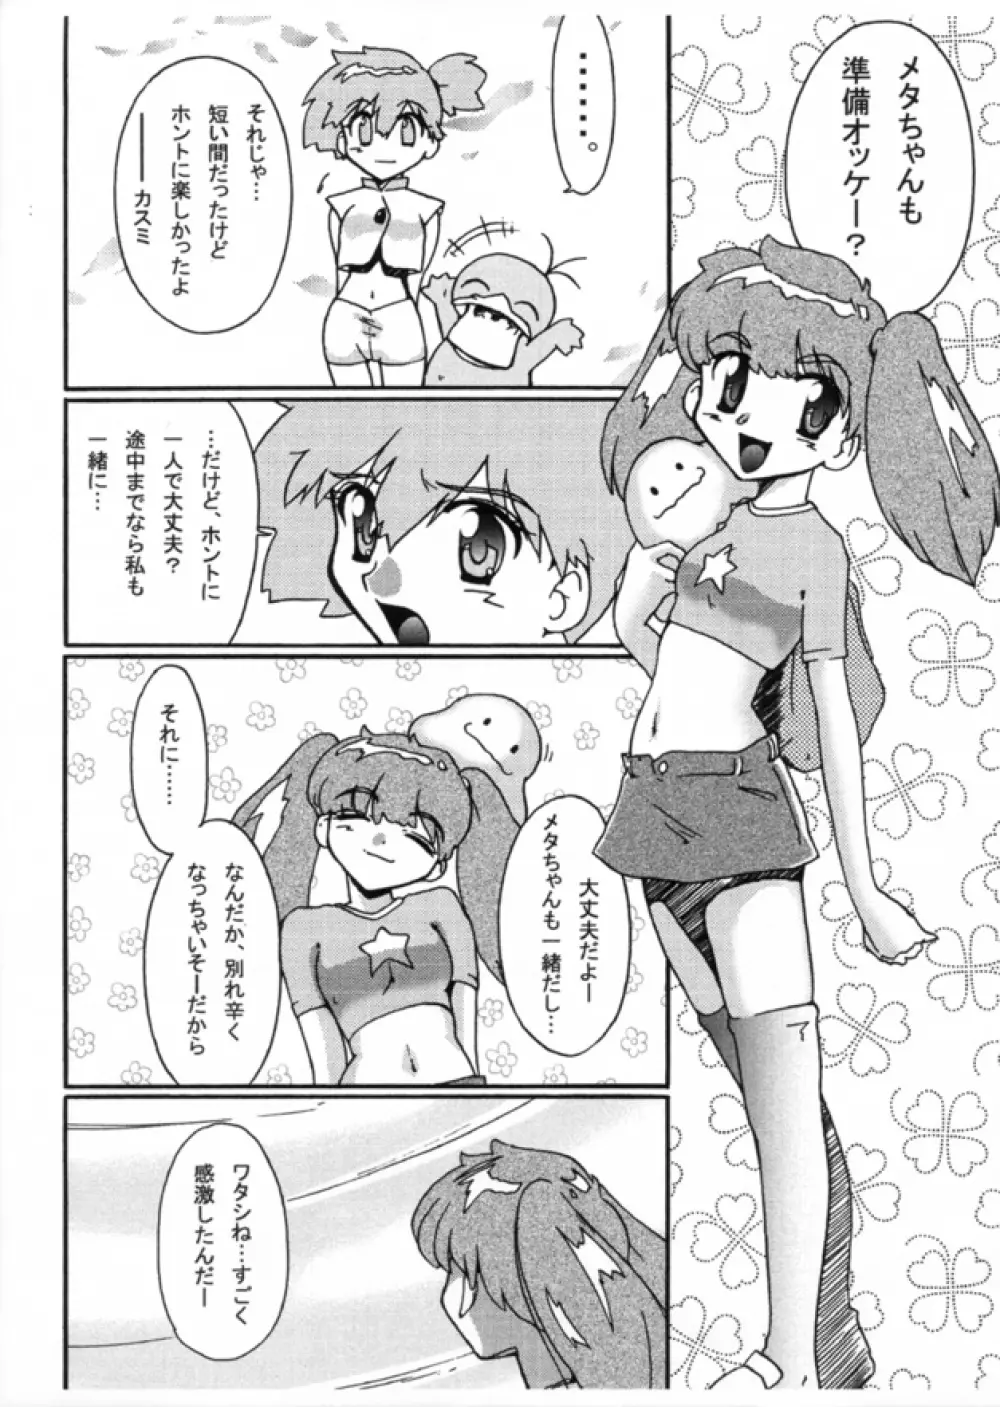 KASUMIX XPLOSION Kasumi Comic part5 - page39